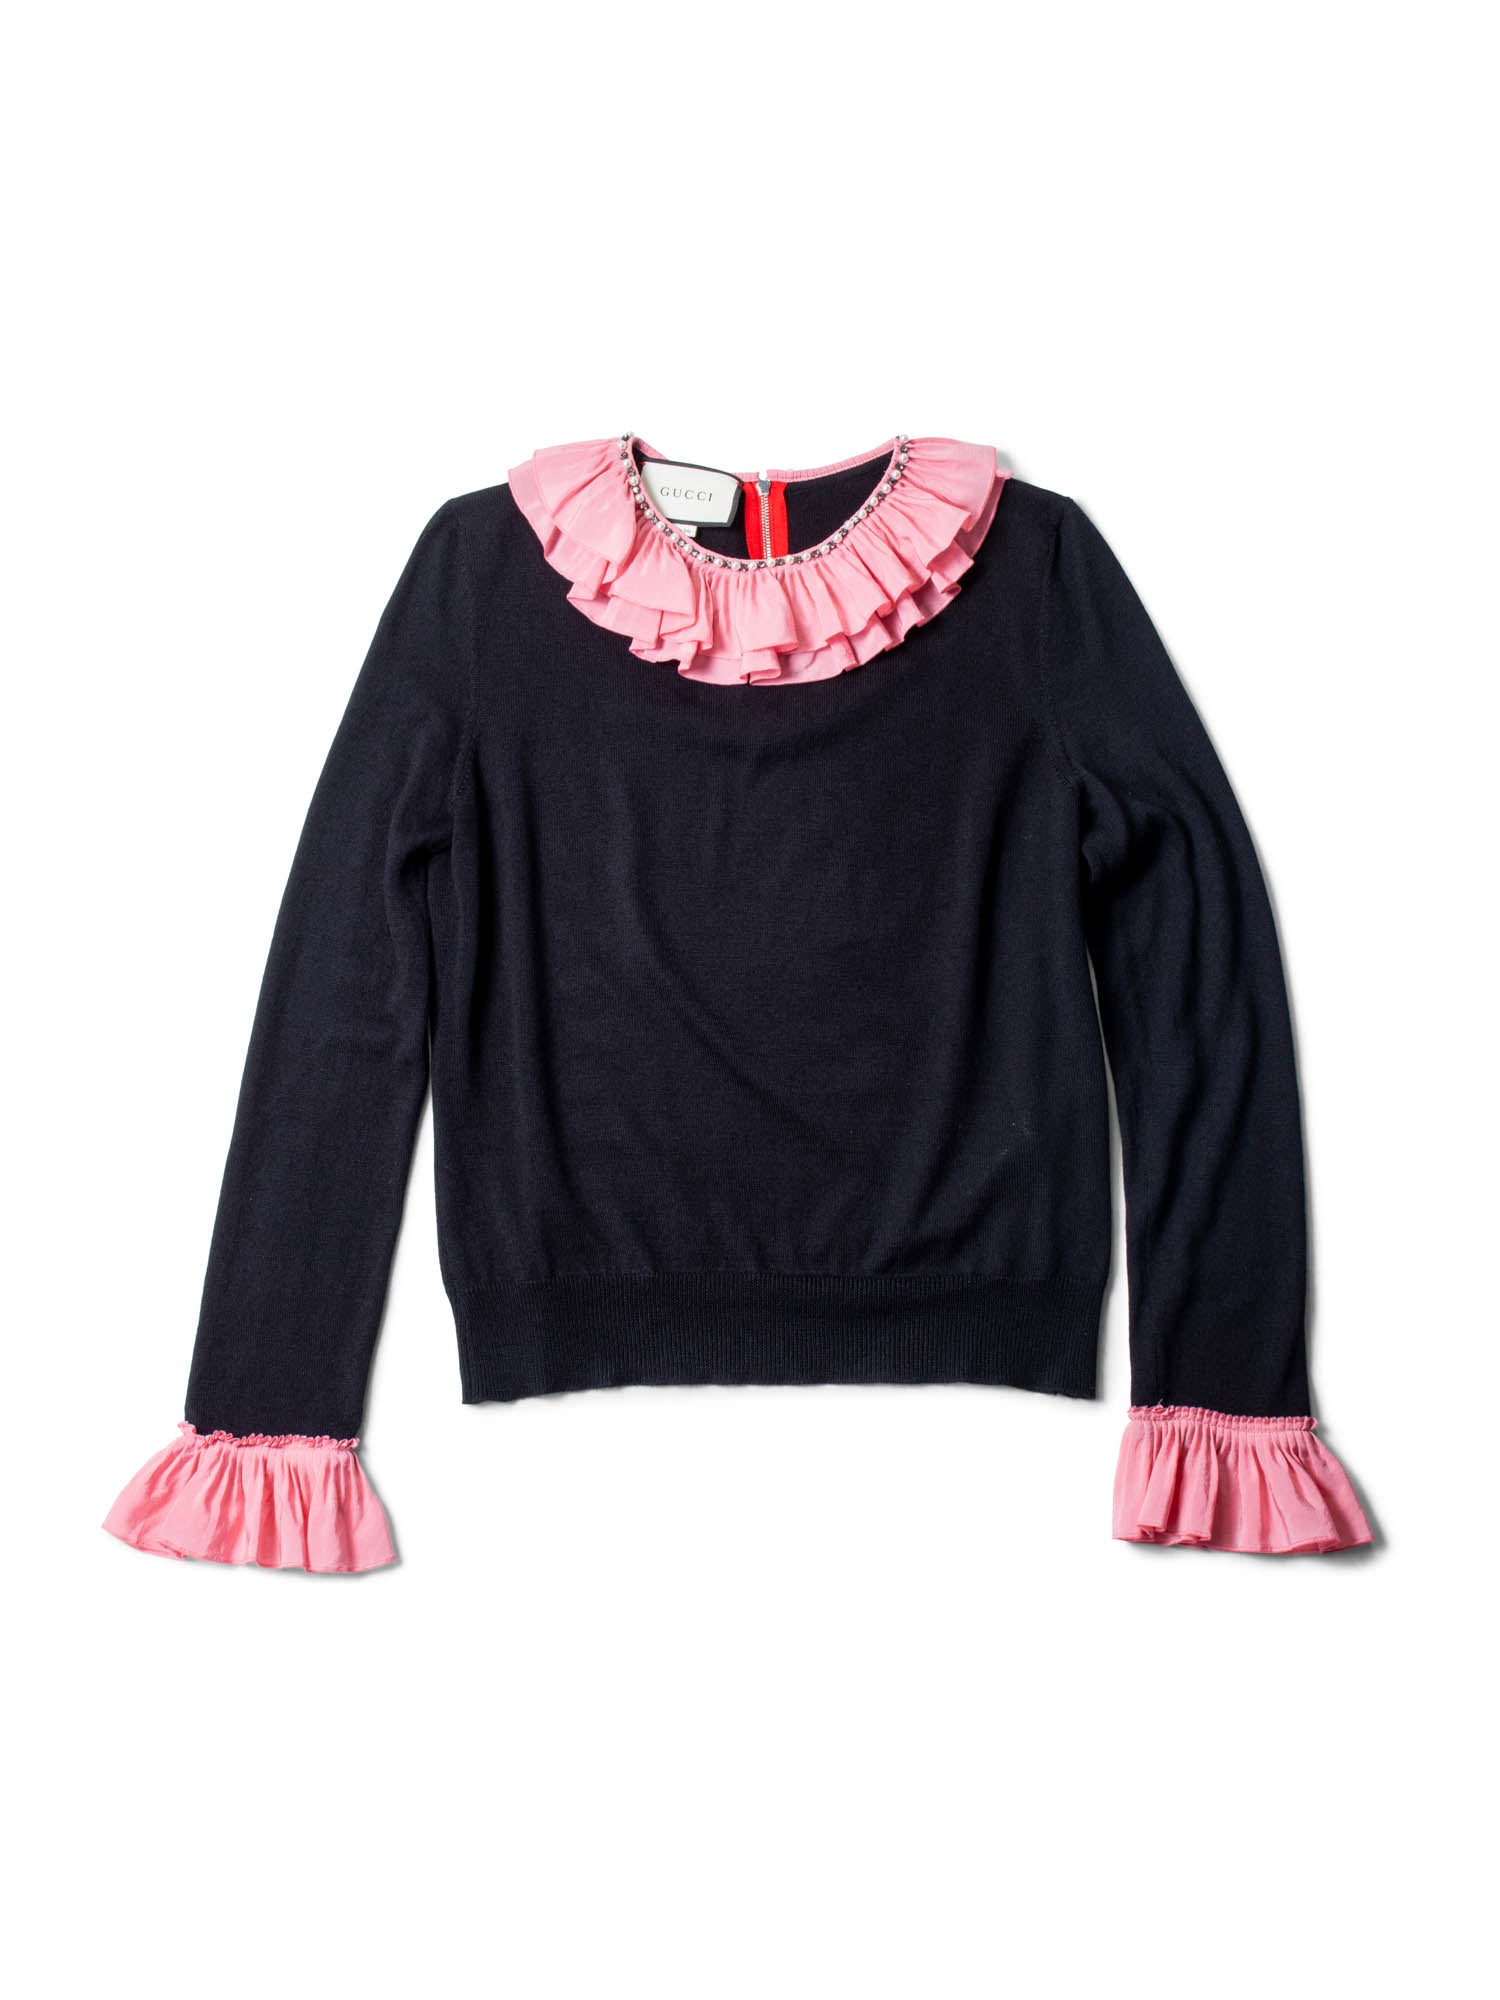 Gucci Runway Cashmere Pearl Neckline Ruffled Sweater Black Pink